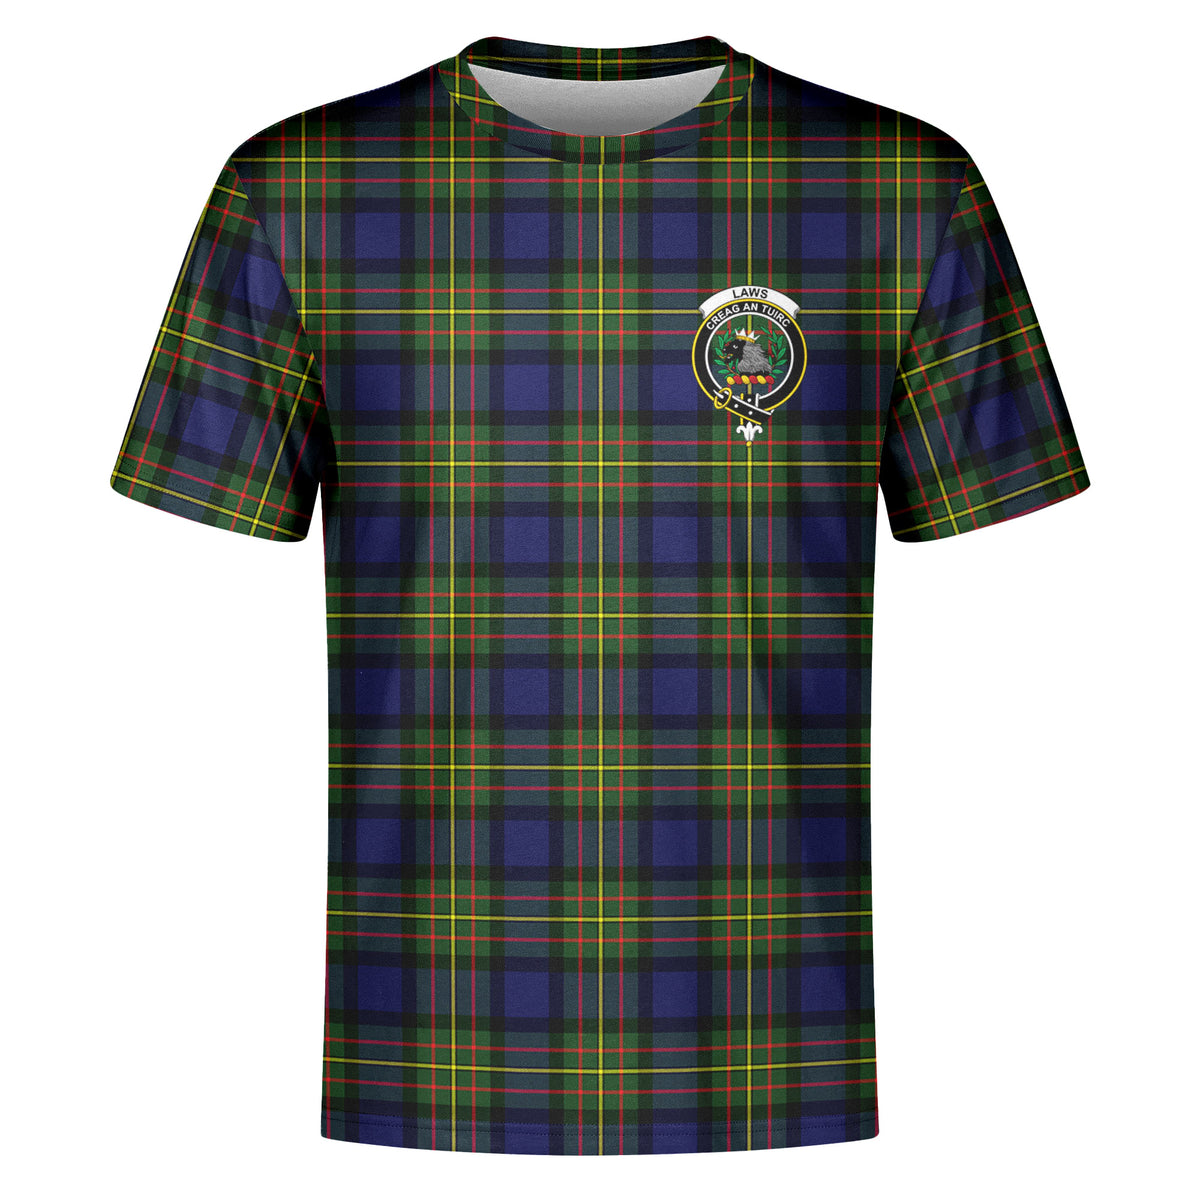 Laws Tartan Crest T-shirt